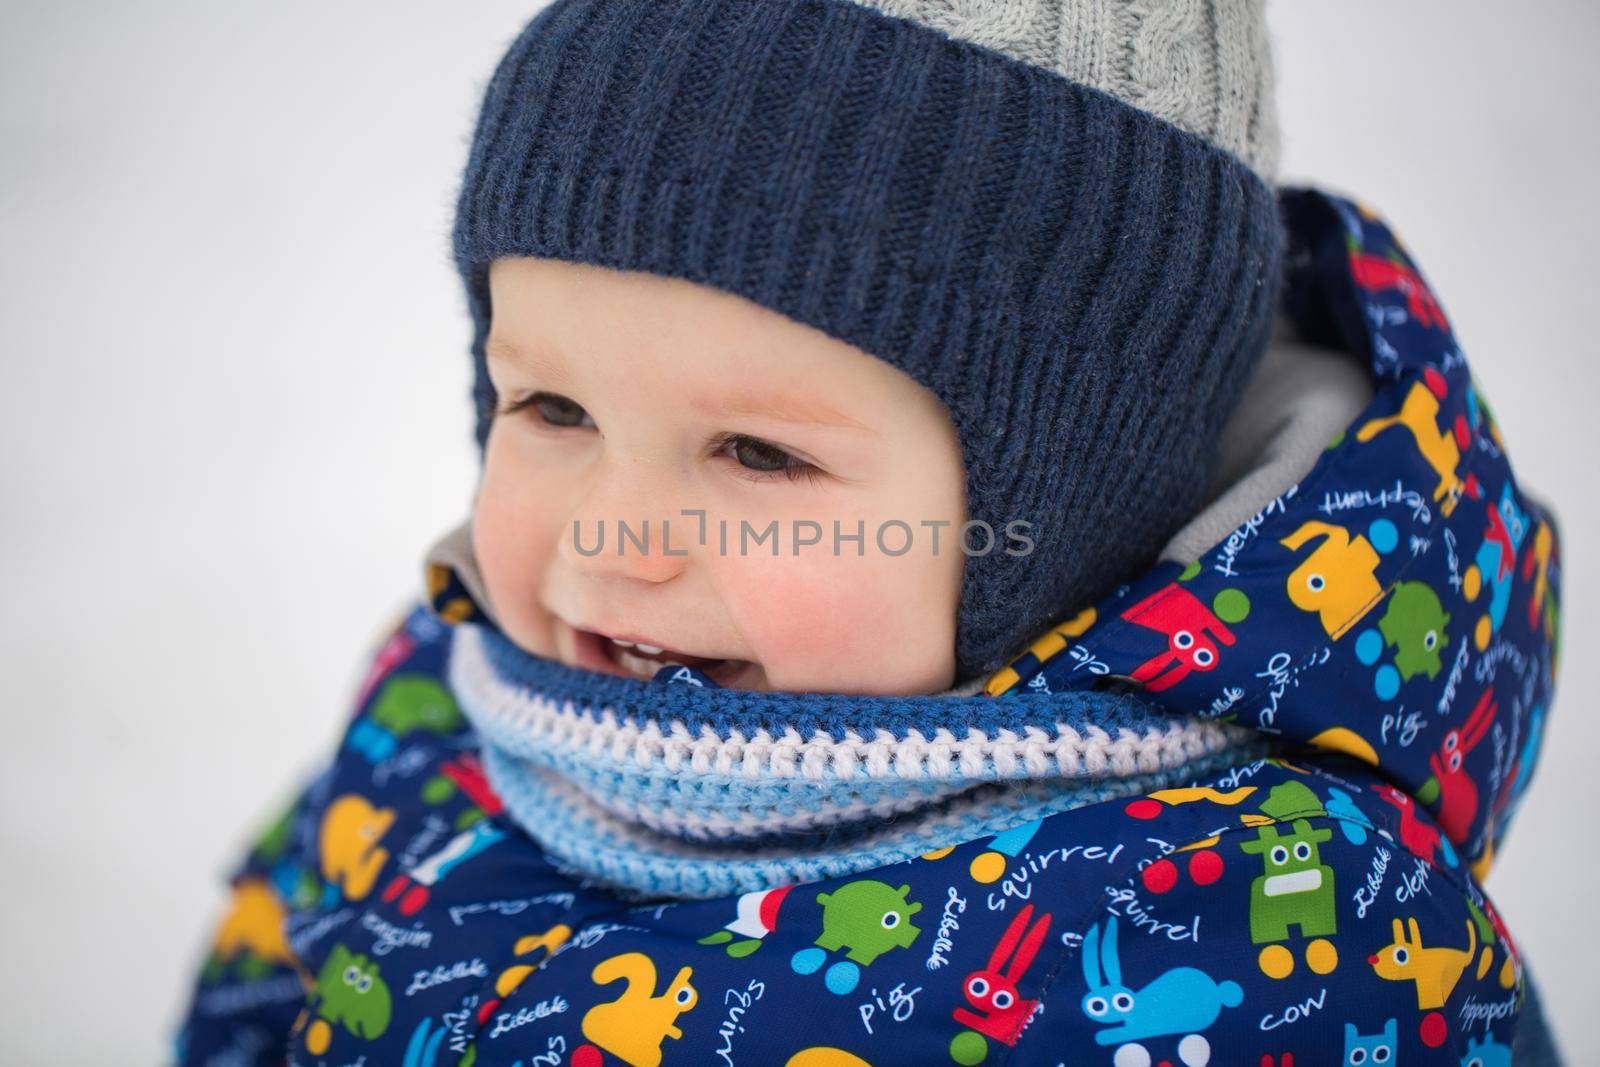 A little boy in a winter jacket is sitting in the snow